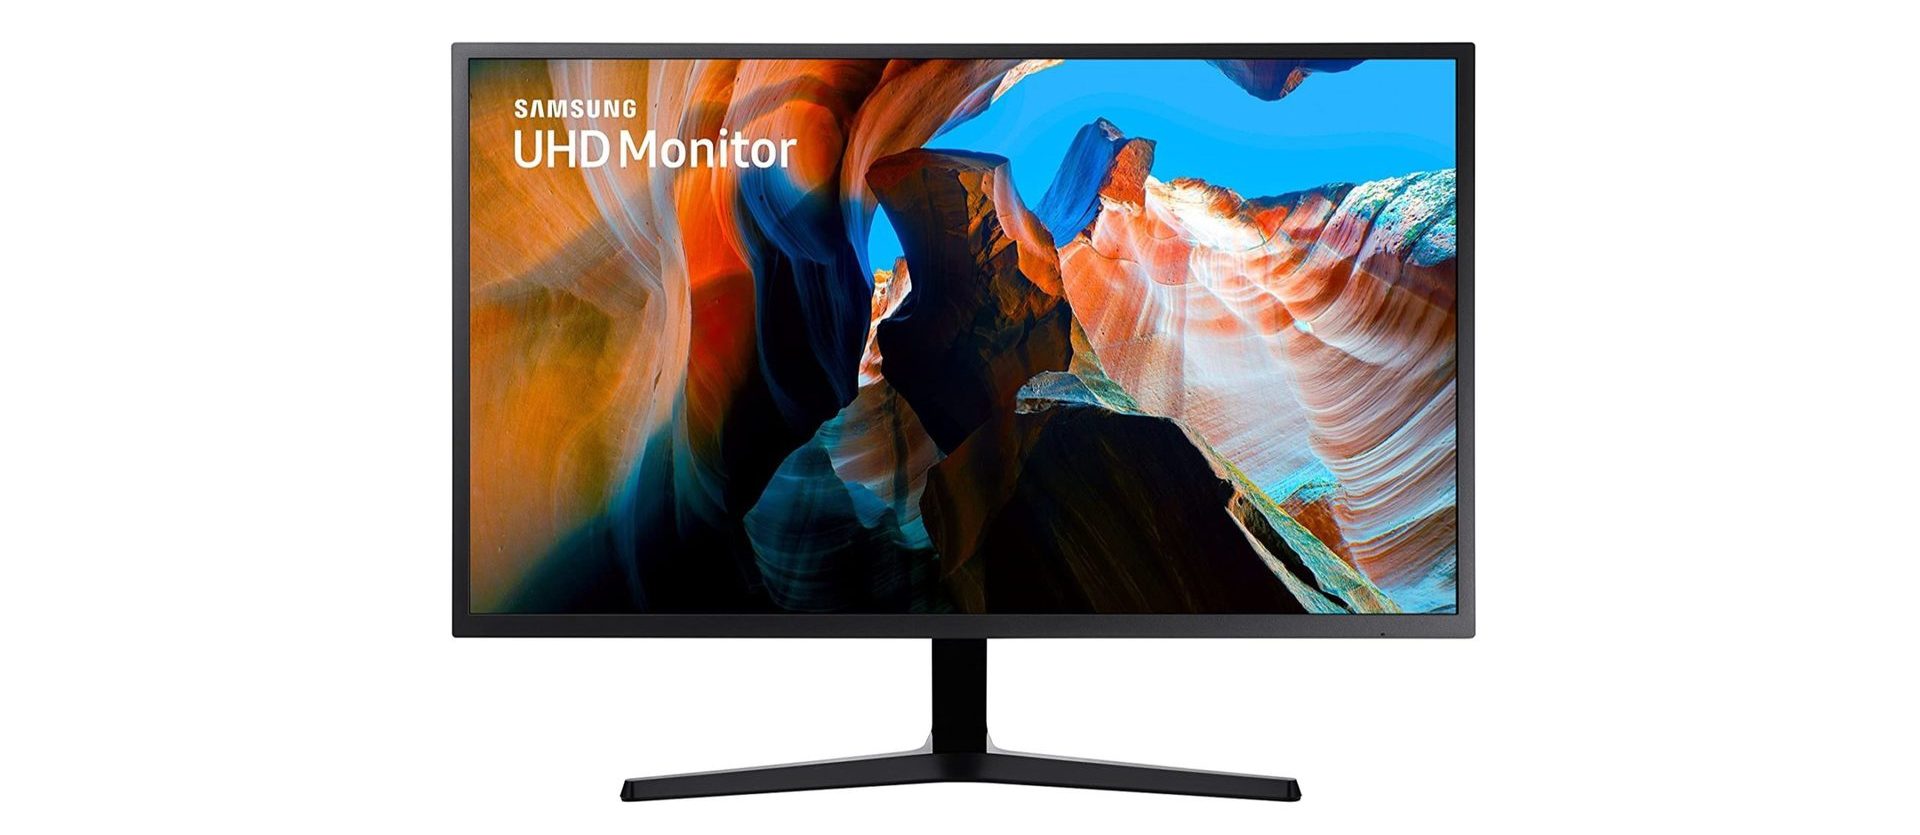 Samsung UJ59 budget 4K monitor